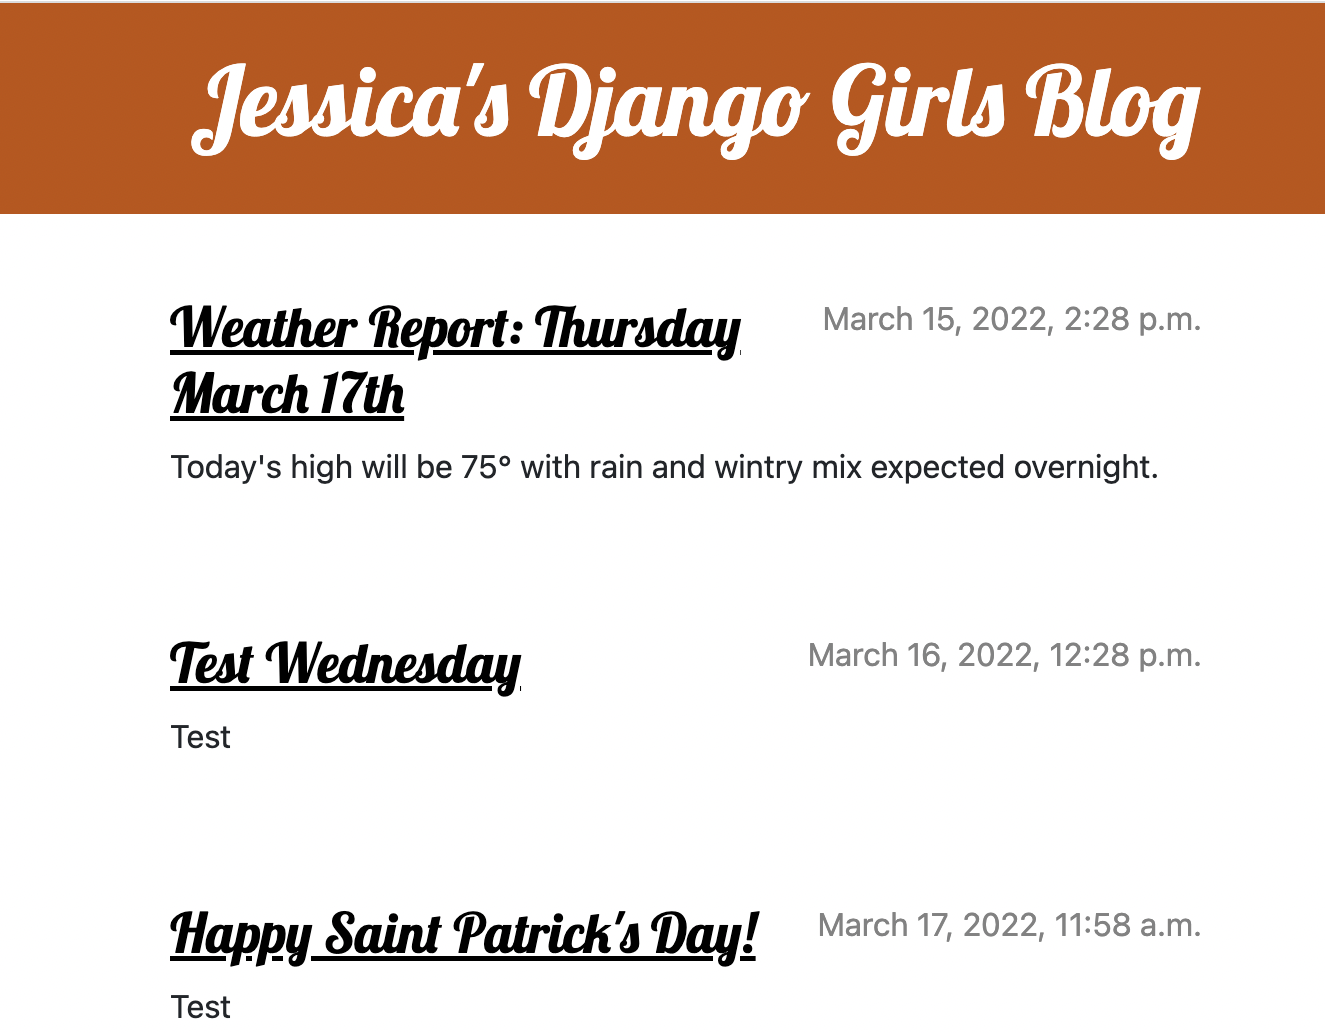 link to DjangoGirls blog